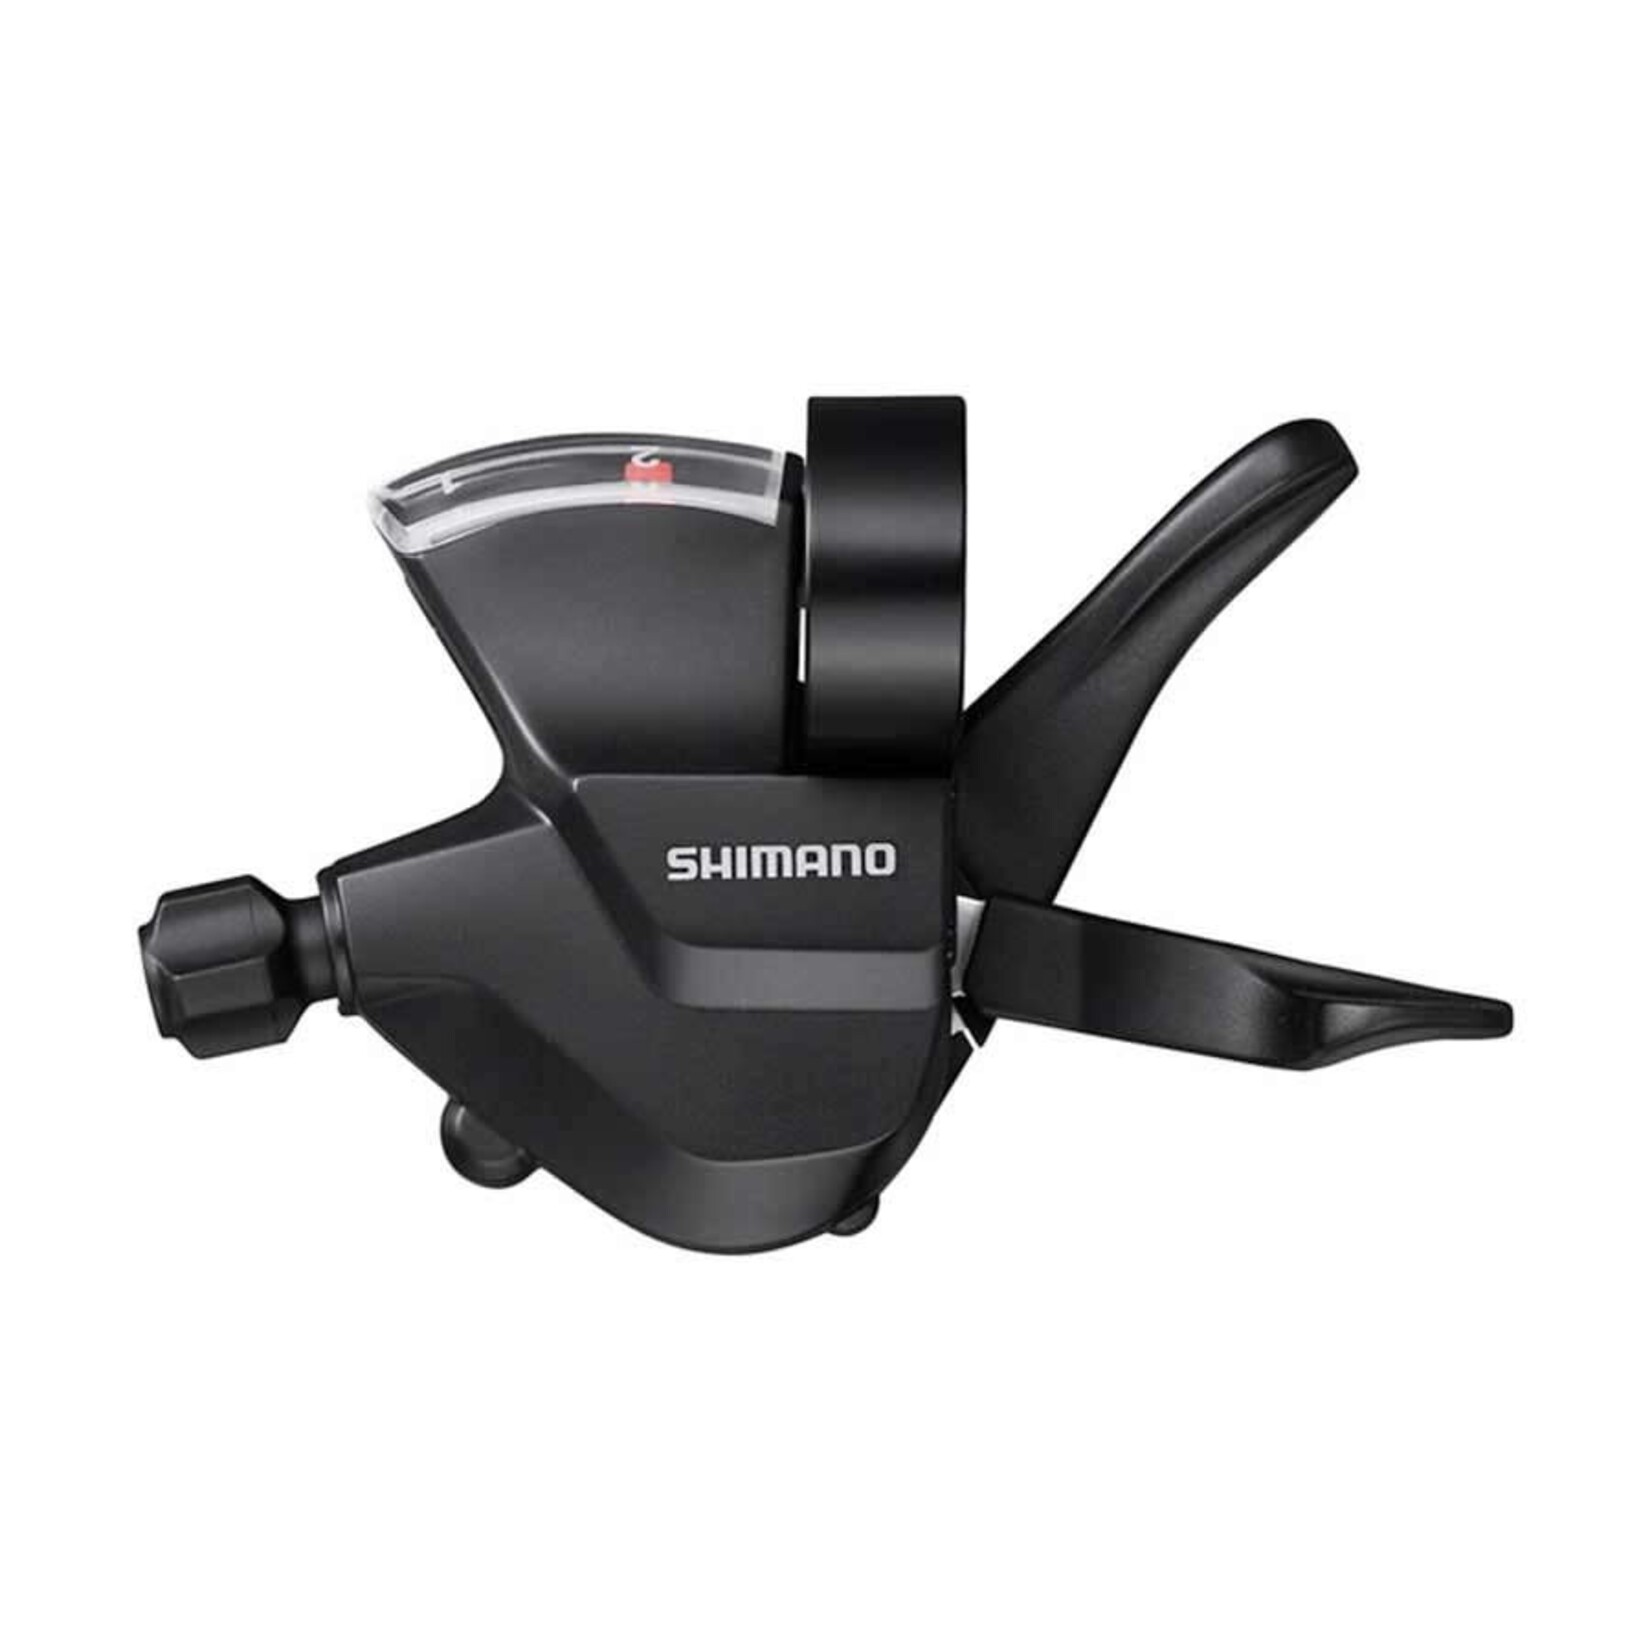 Shimano Shimano Trigger Shifter, SL-M315-7R, 7-Speed, Blk